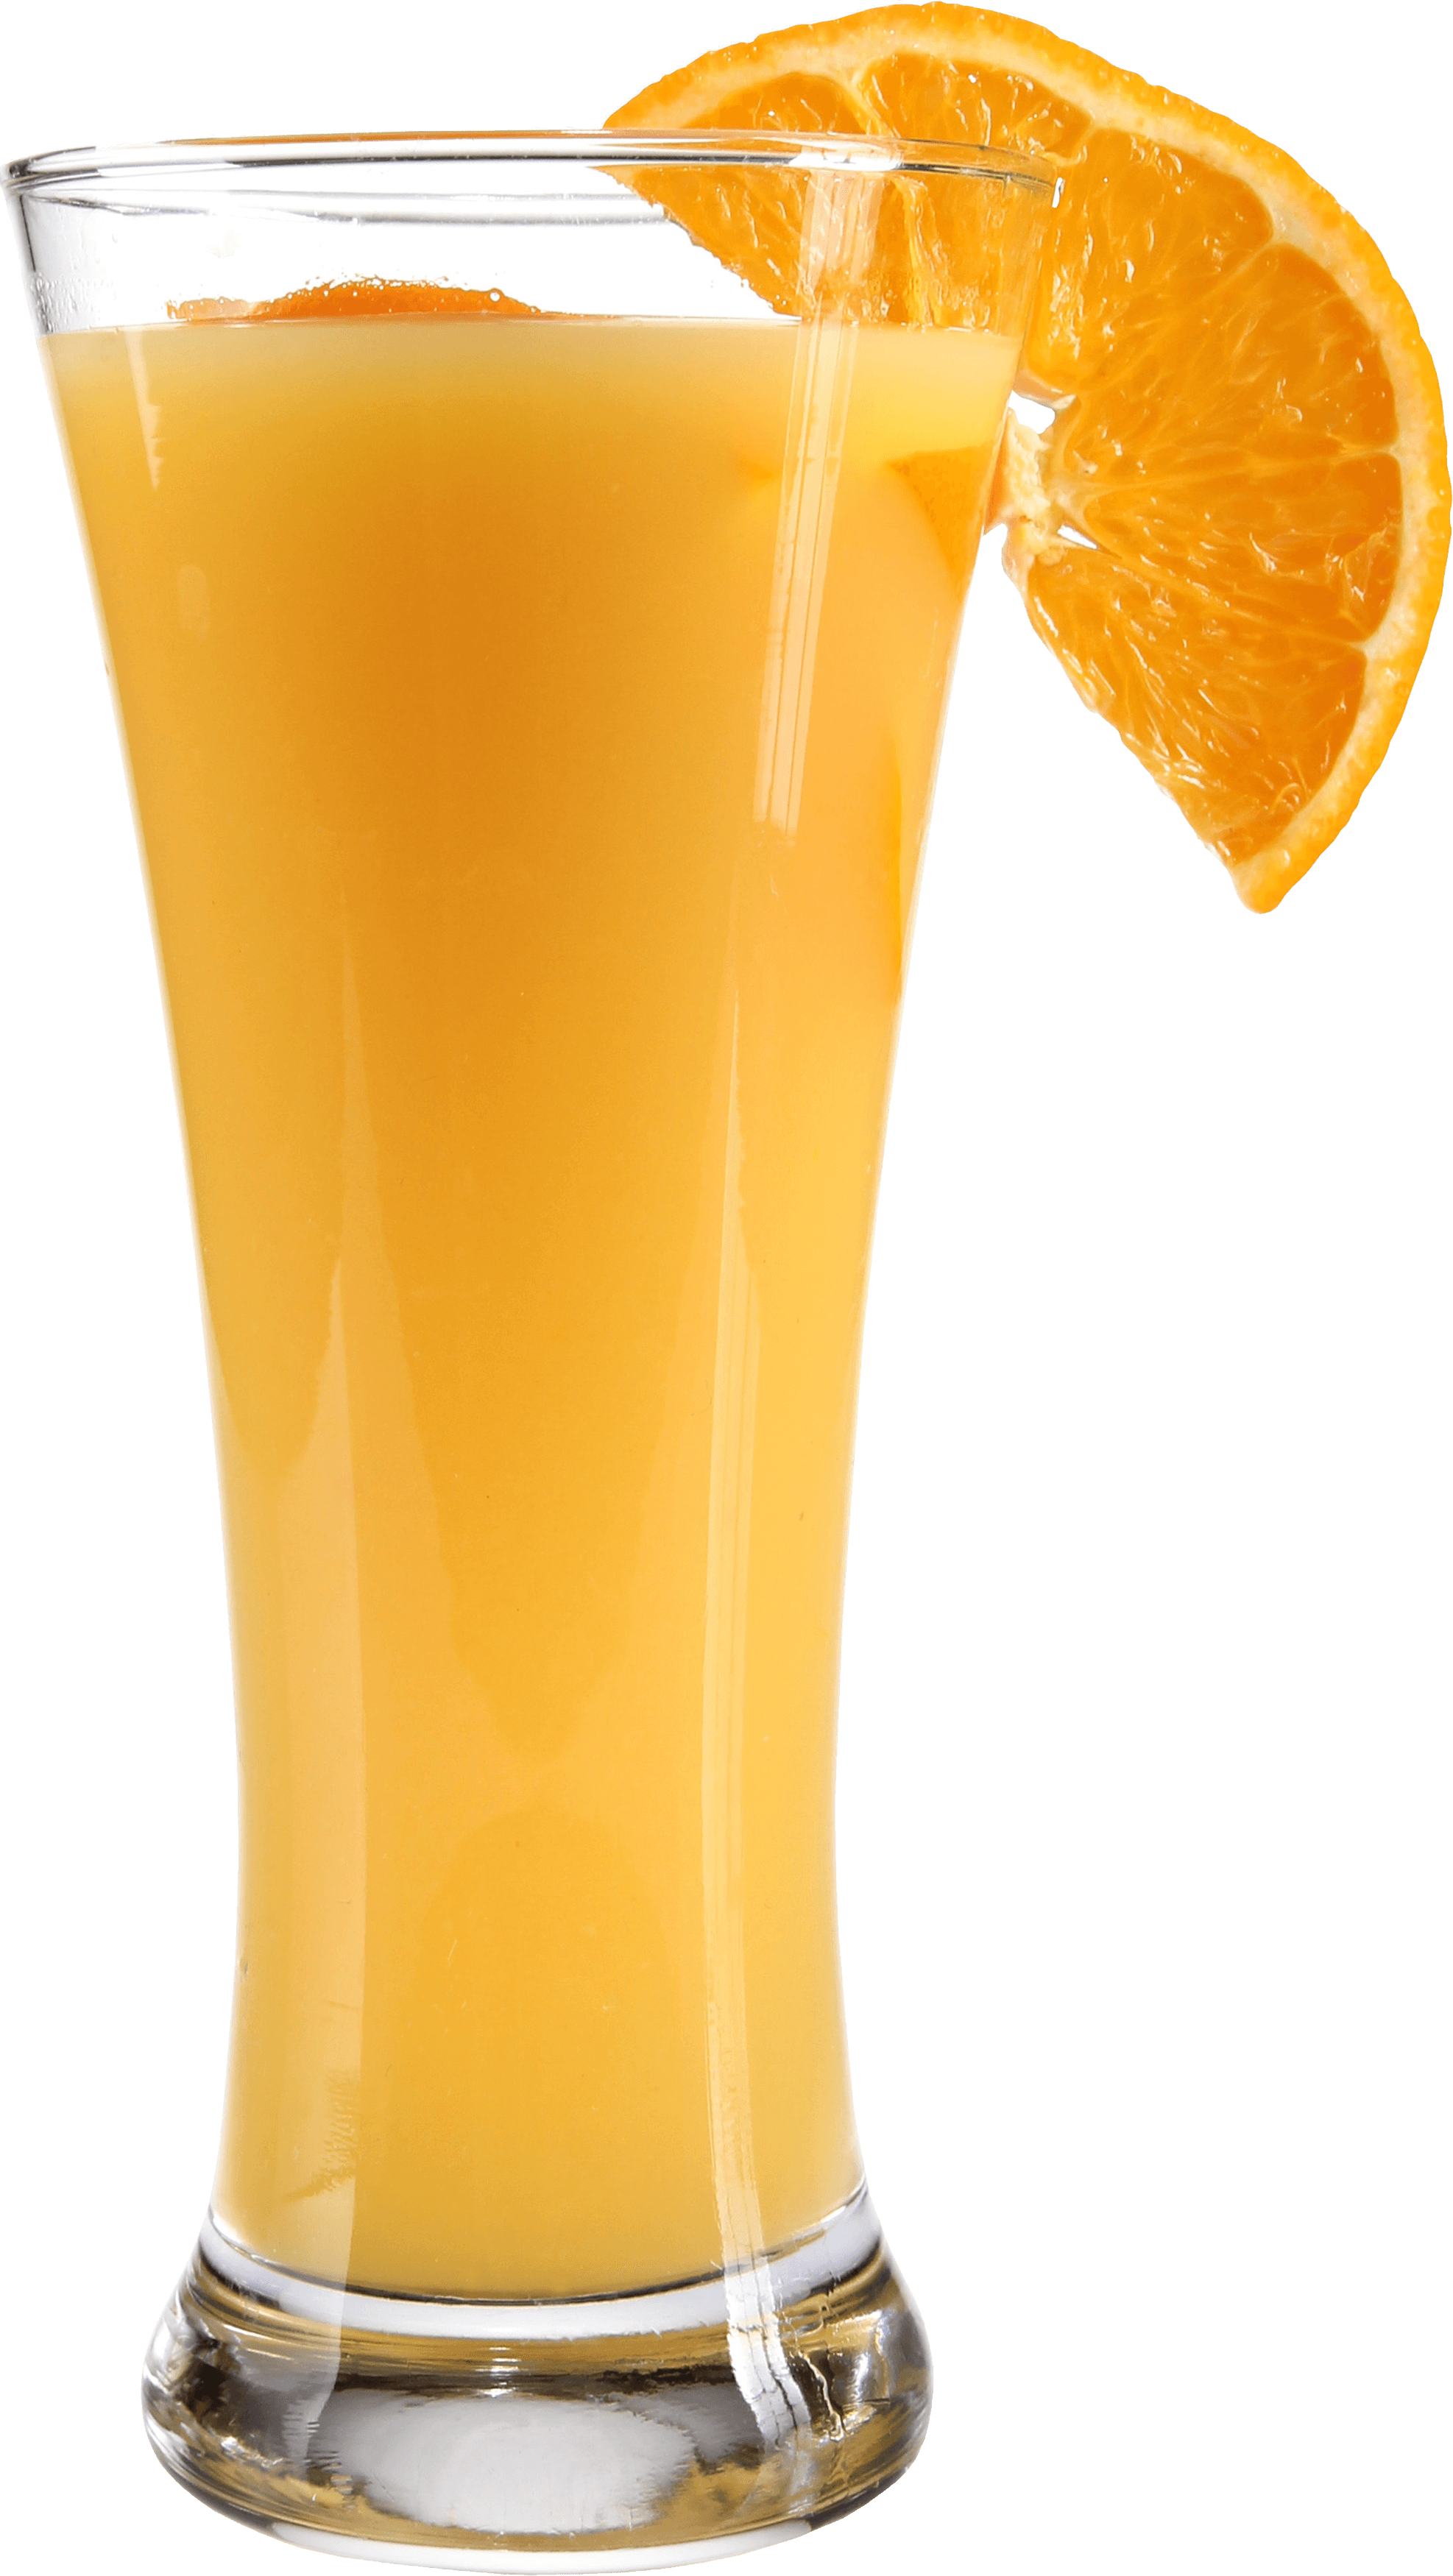 Orange juice glass.png